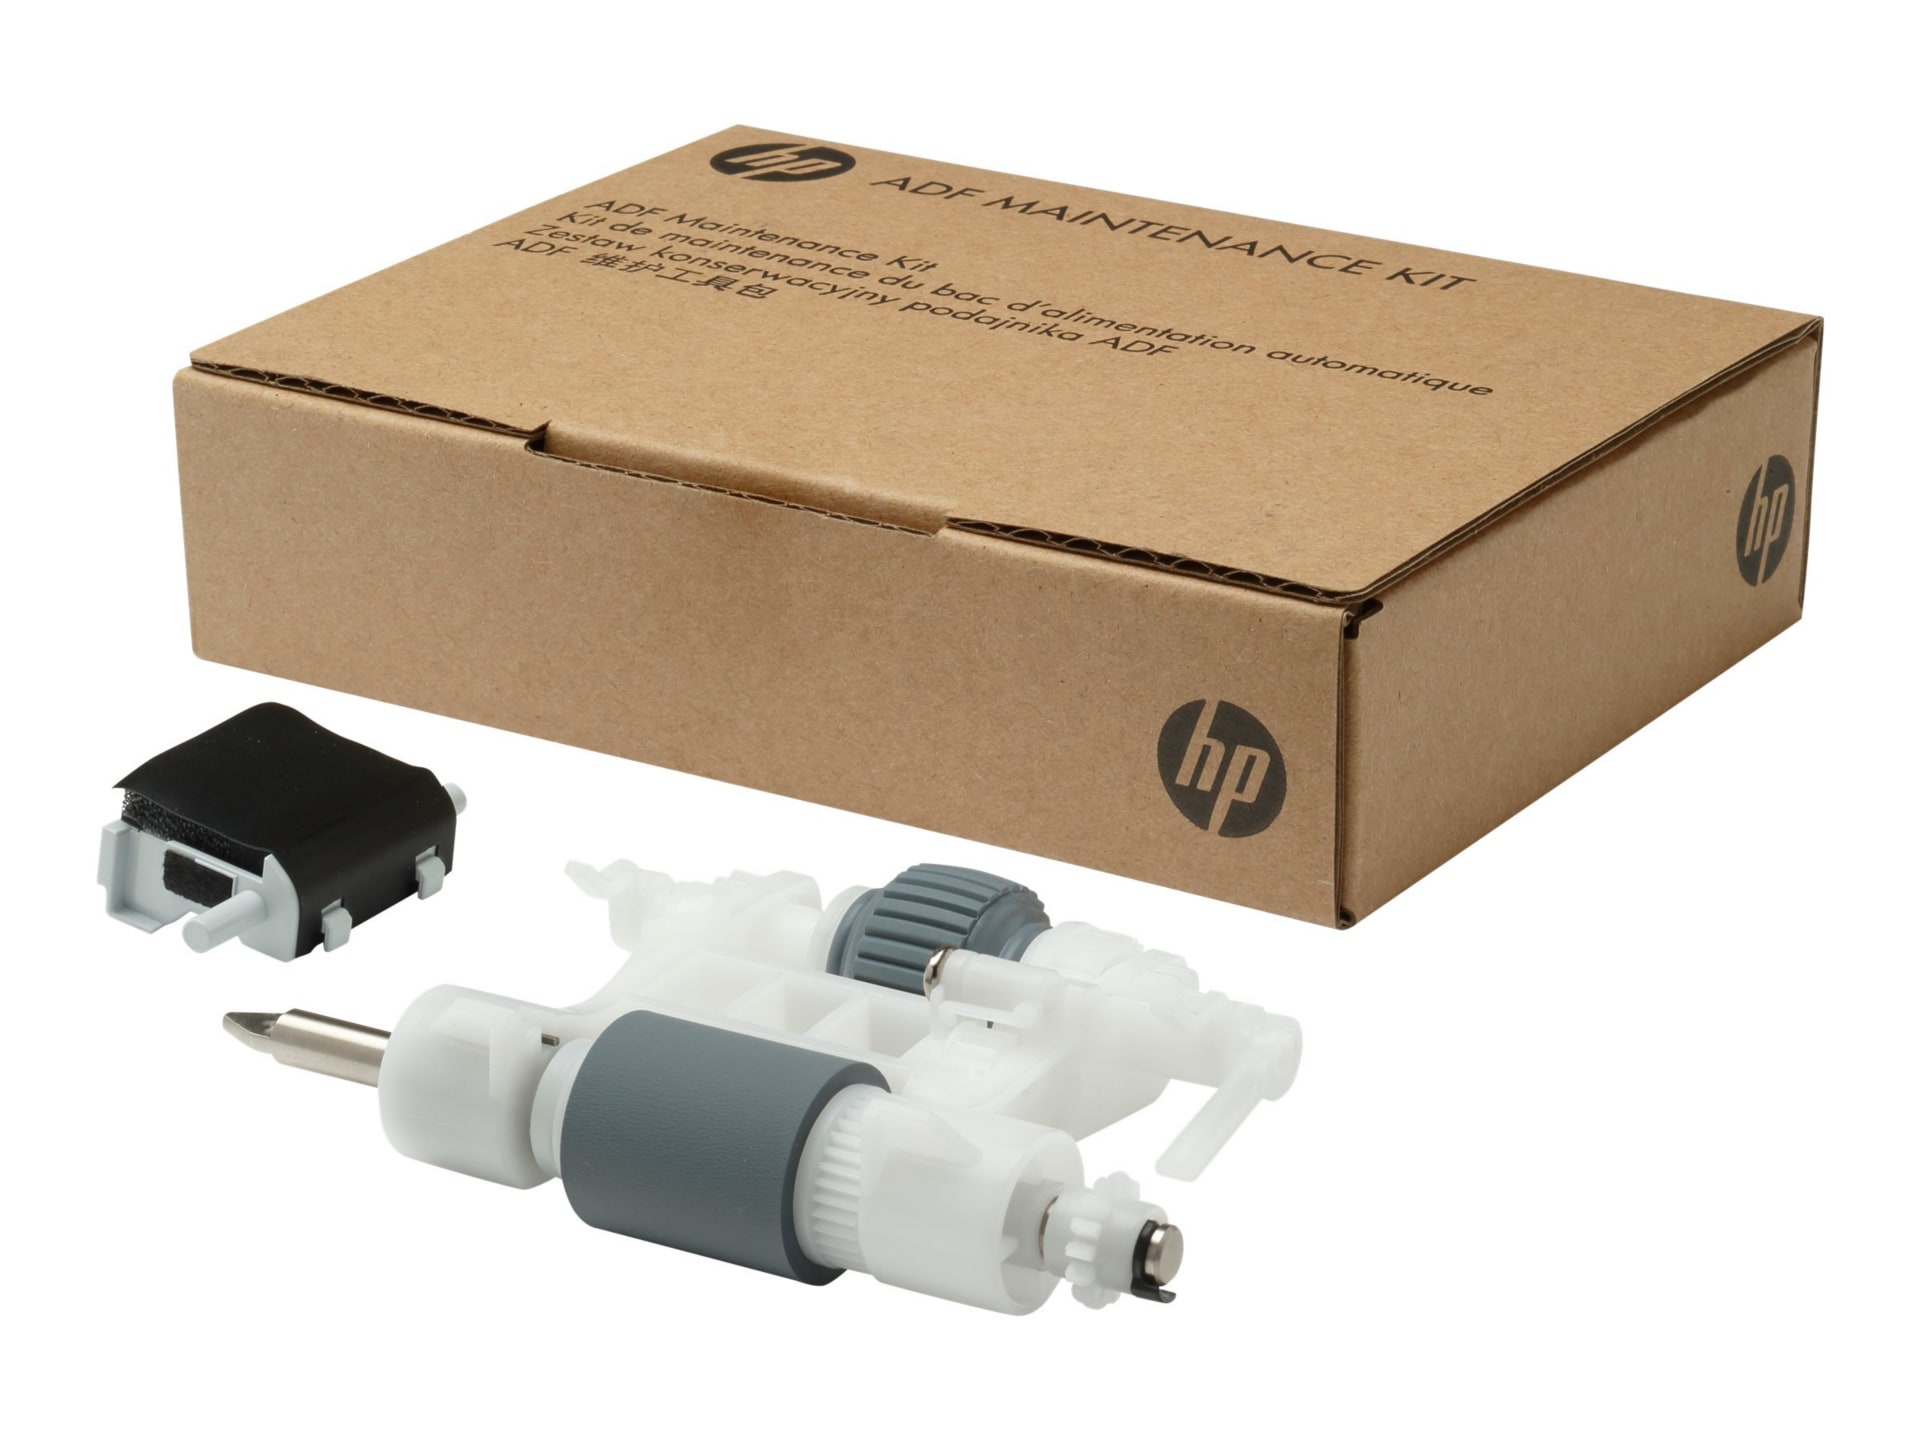 HP printer ADF maintenance kit